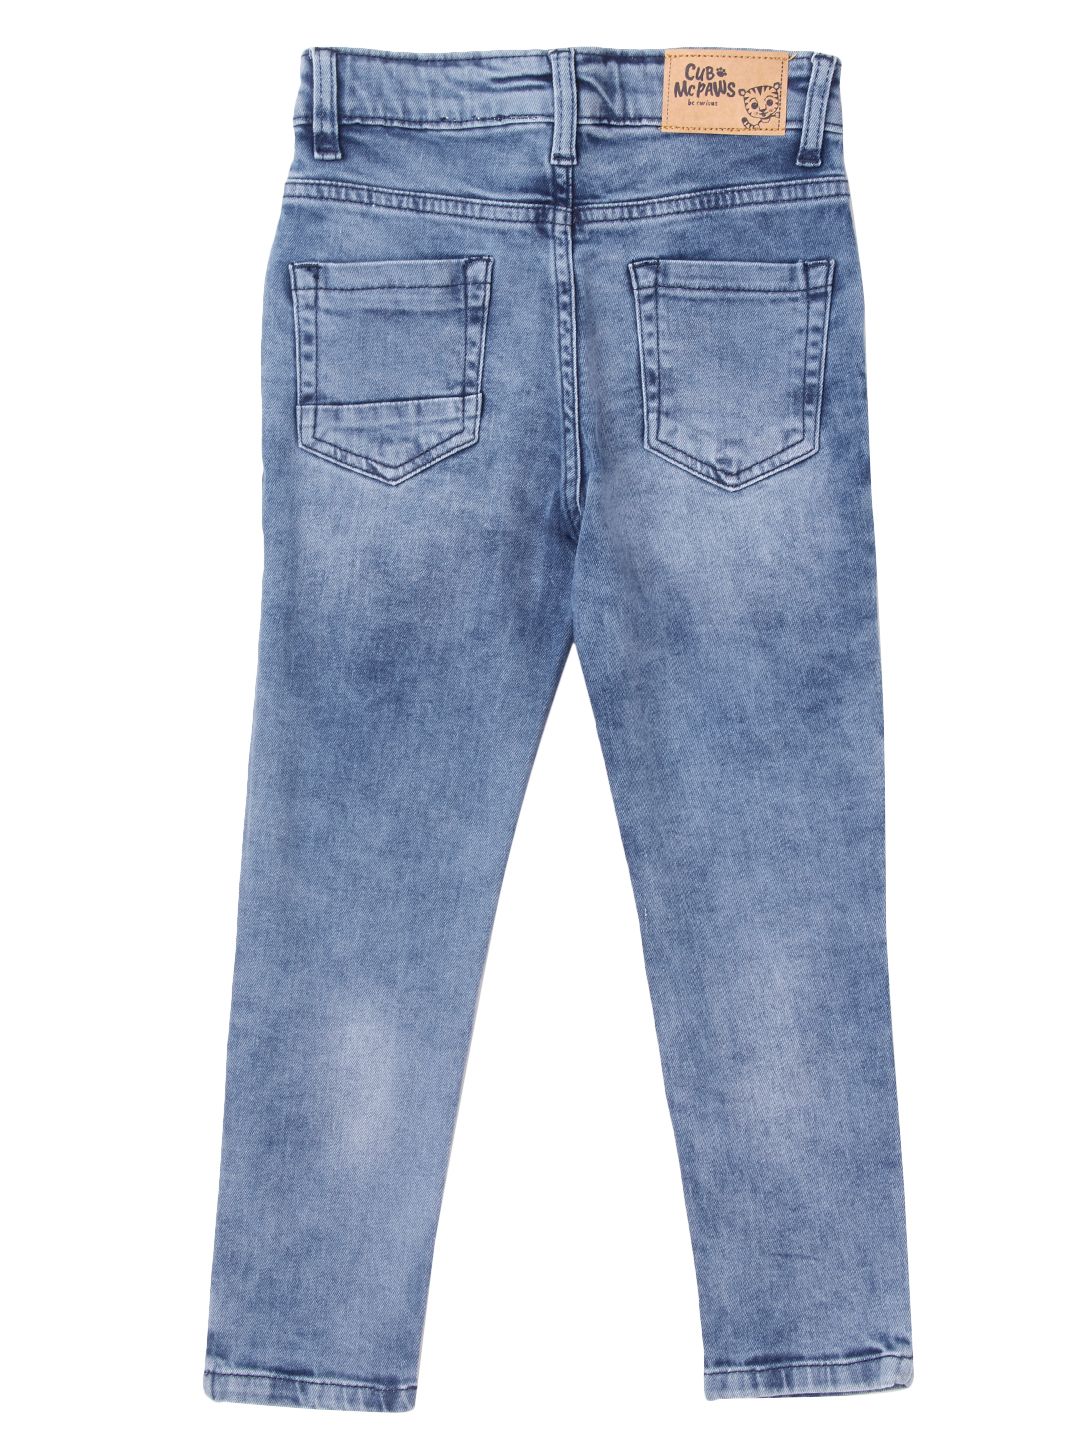 Fashion Blue Jeans Men Ankle Length Jeans Male Sight Denim Pants @ Best  Price Online | Jumia Egypt